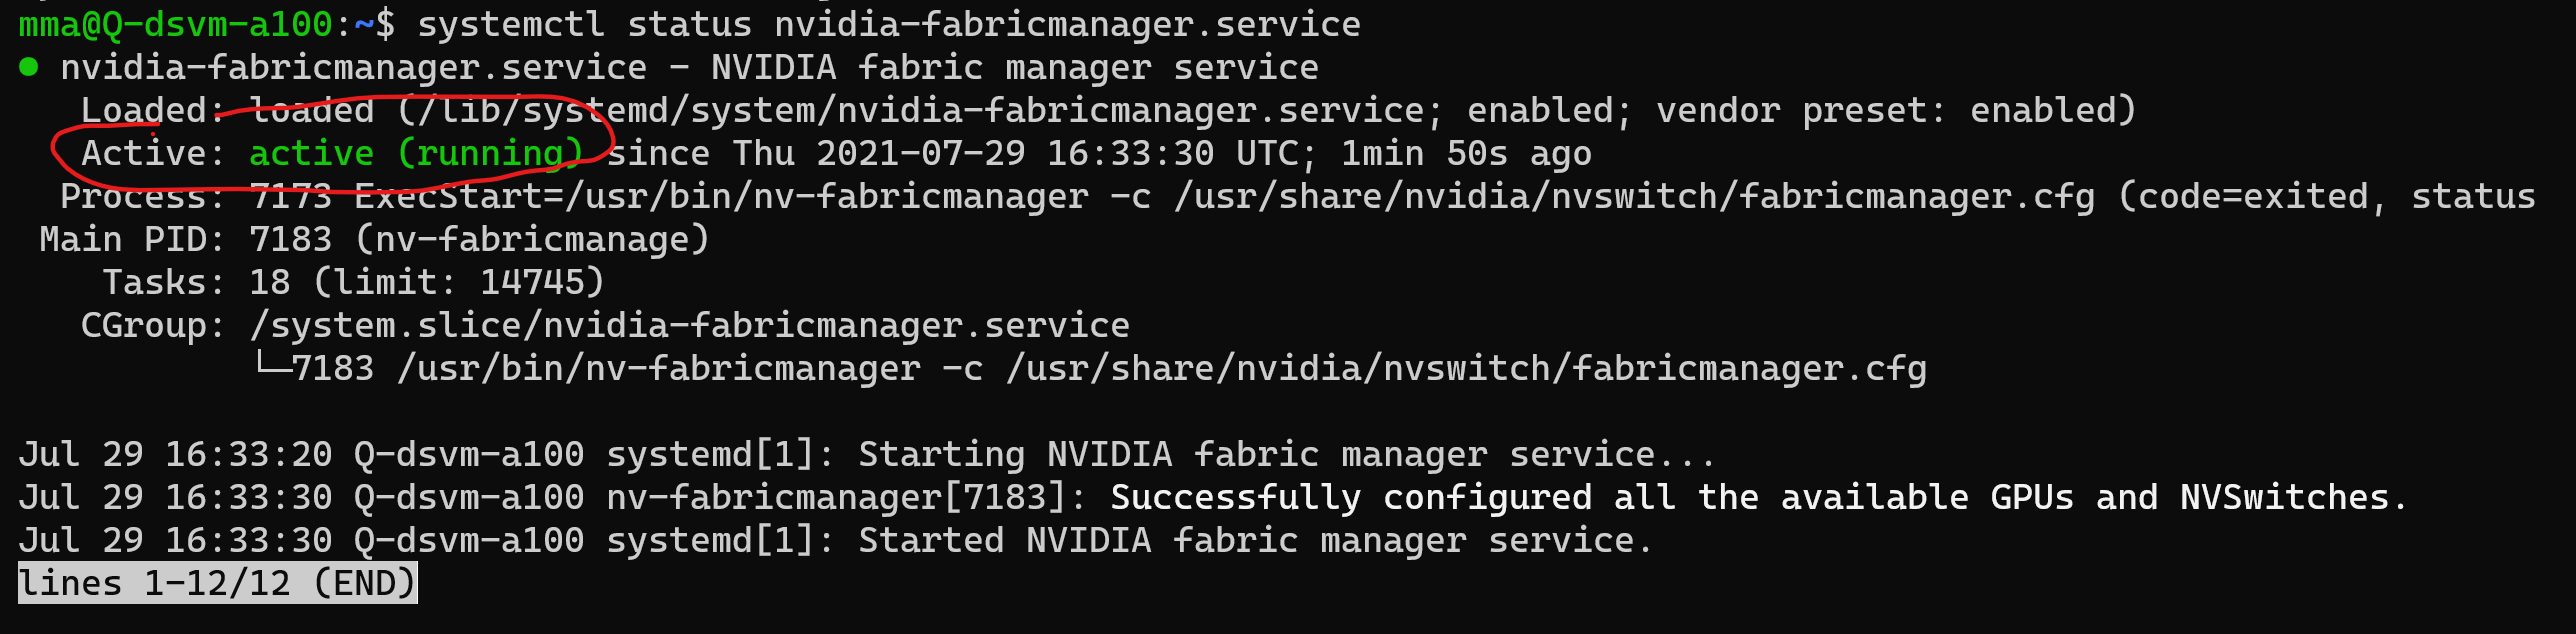 nvidia-fabric-manager-status